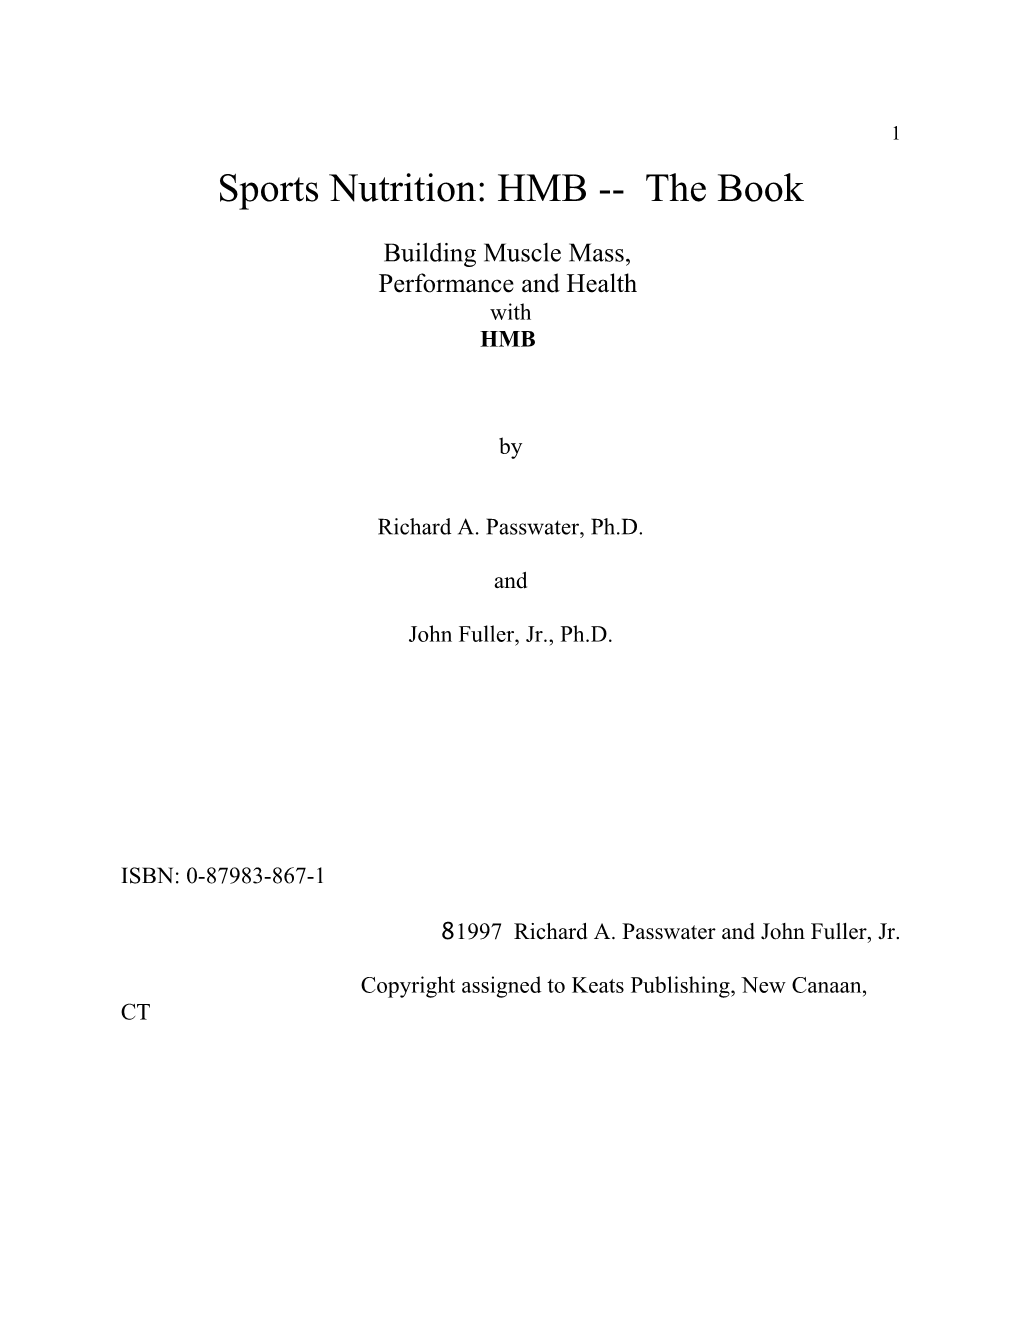 Sports Nutrition: HMB the Book